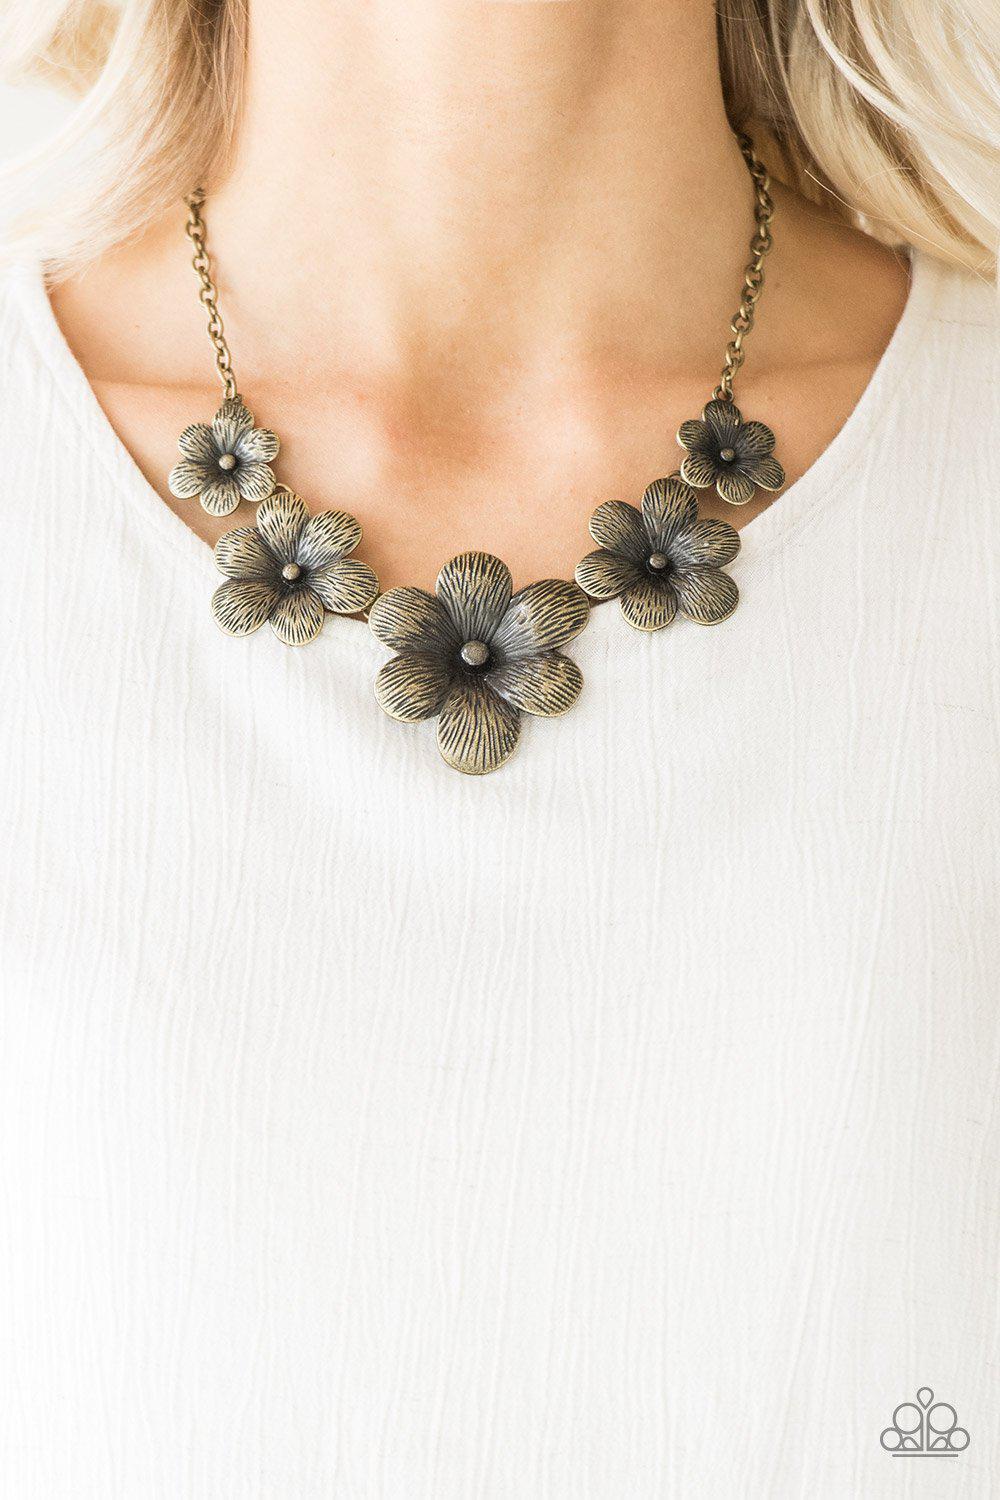 Secret Garden Brass Flower Necklace - Paparazzi Accessories - lightbox -CarasShop.com - $5 Jewelry by Cara Jewels